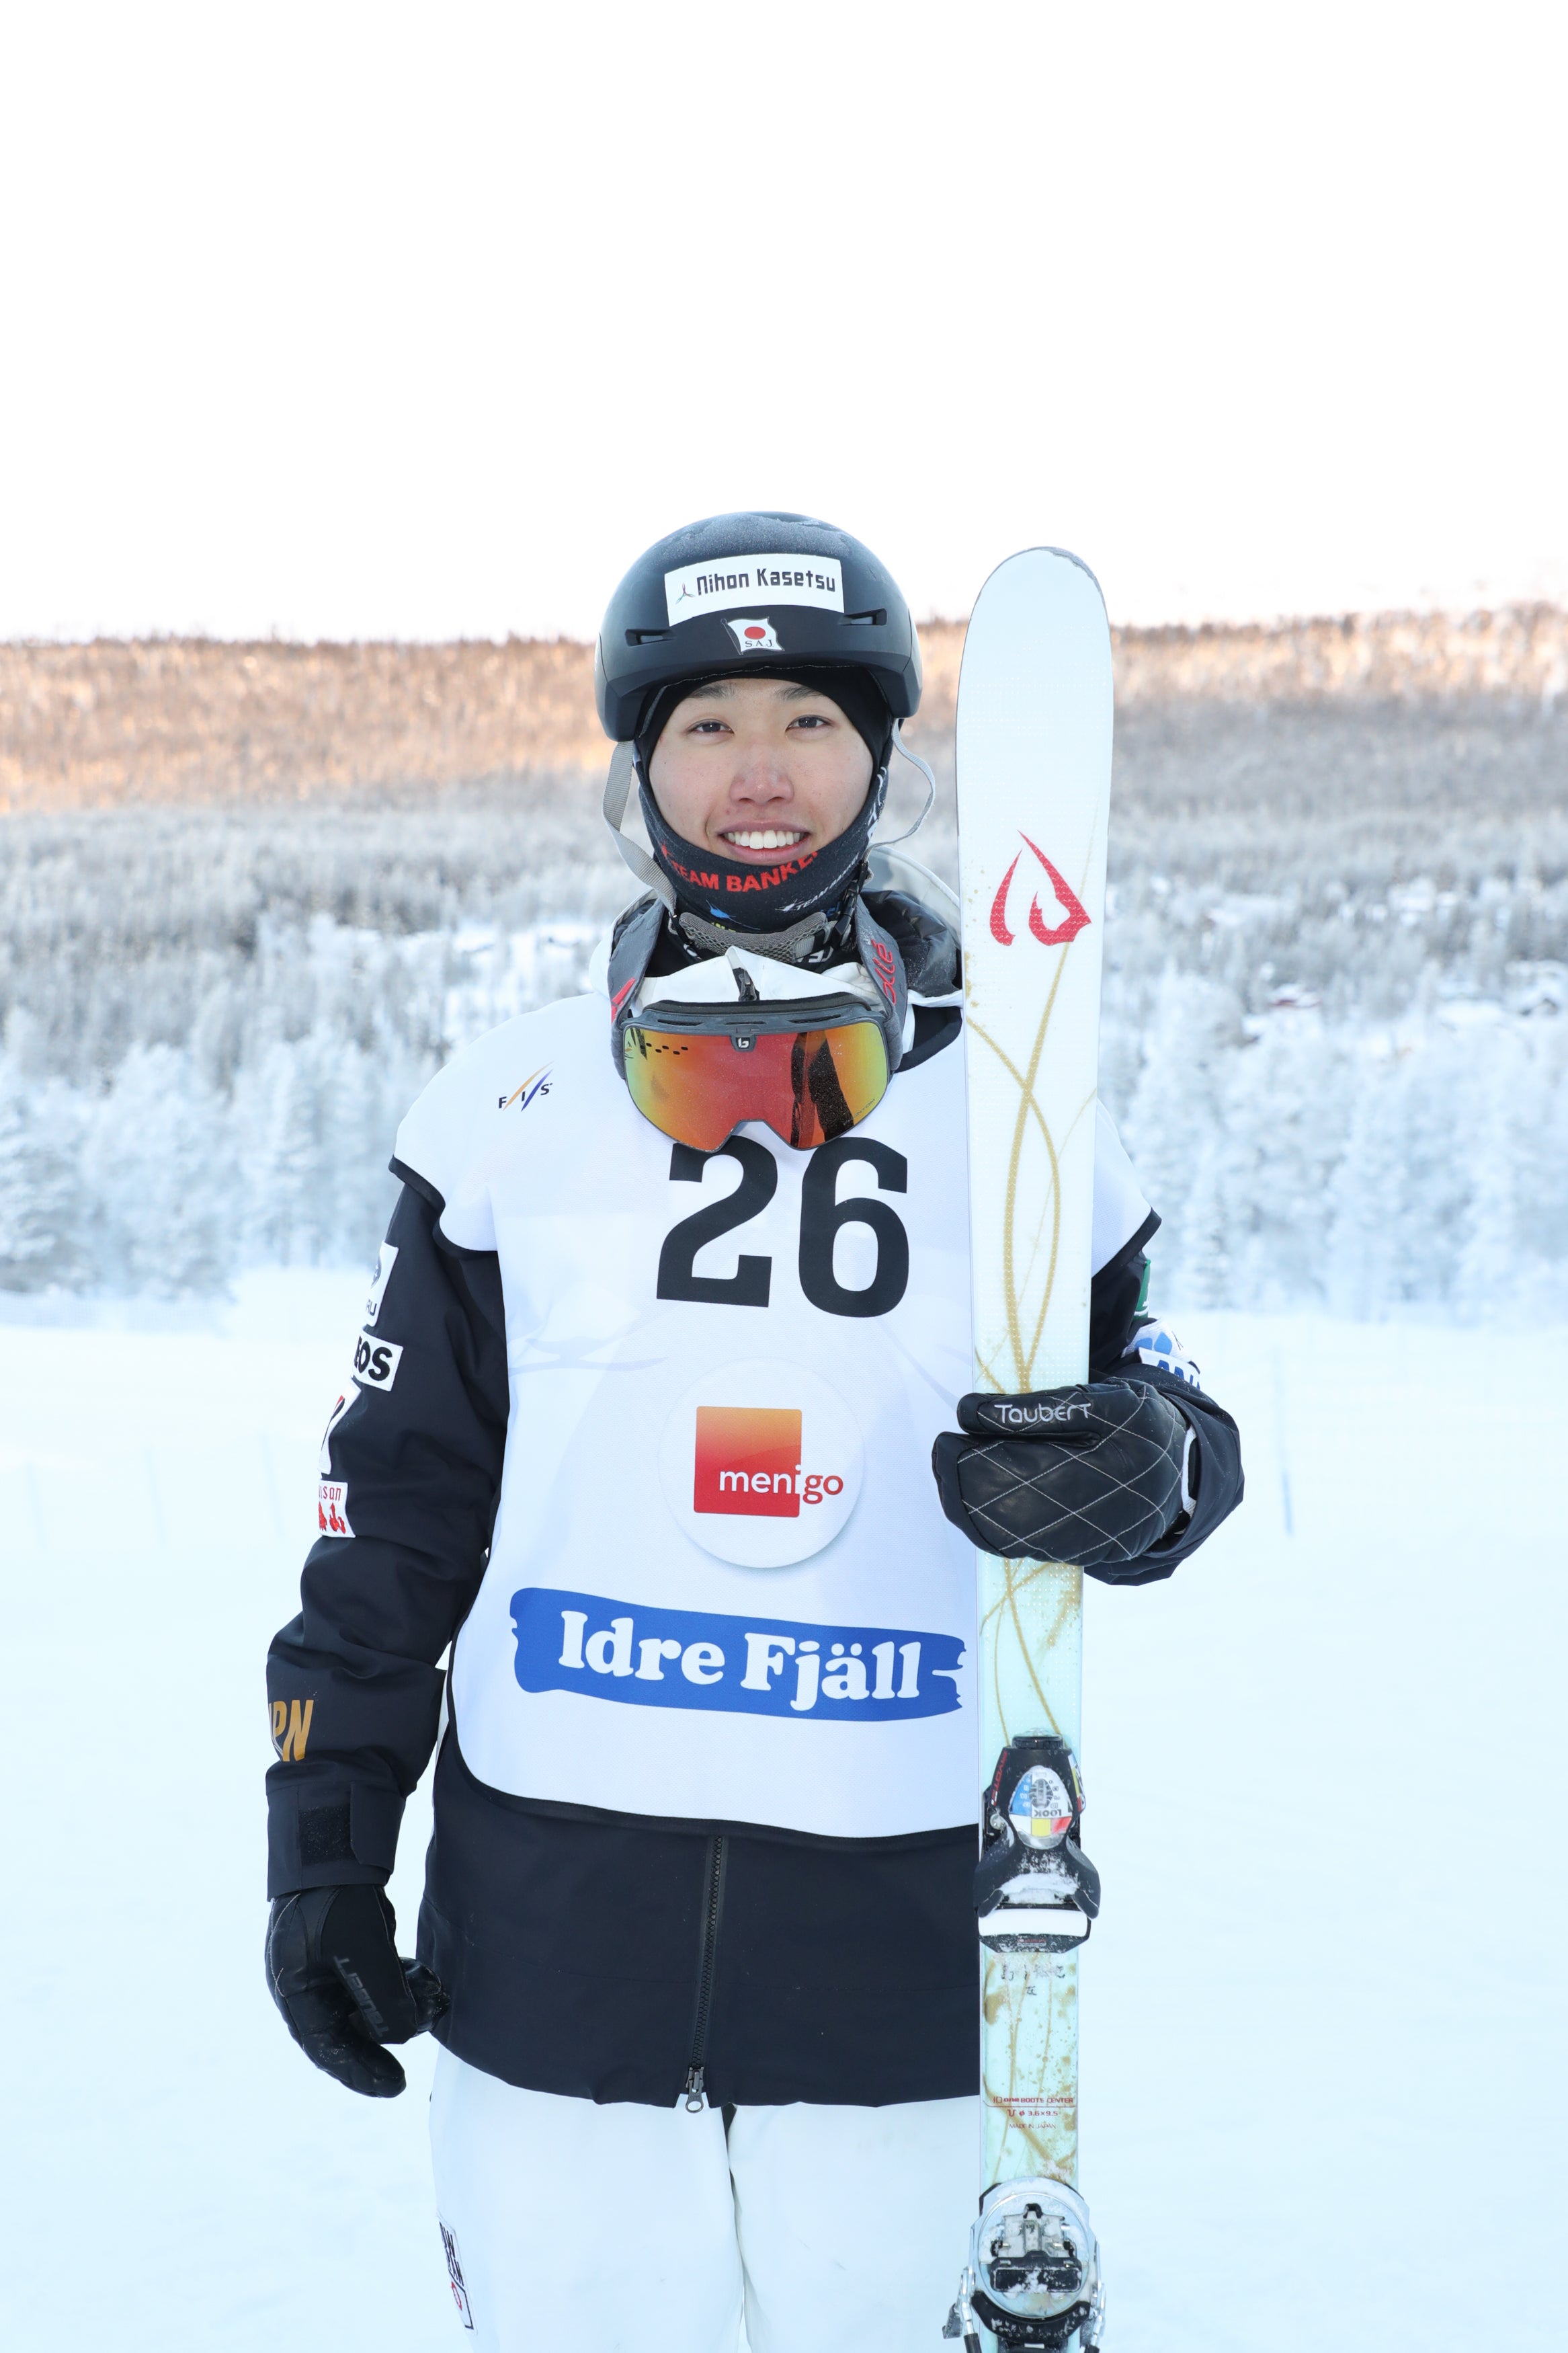 Photo of Takuya Shimakawa - Mogul Skier